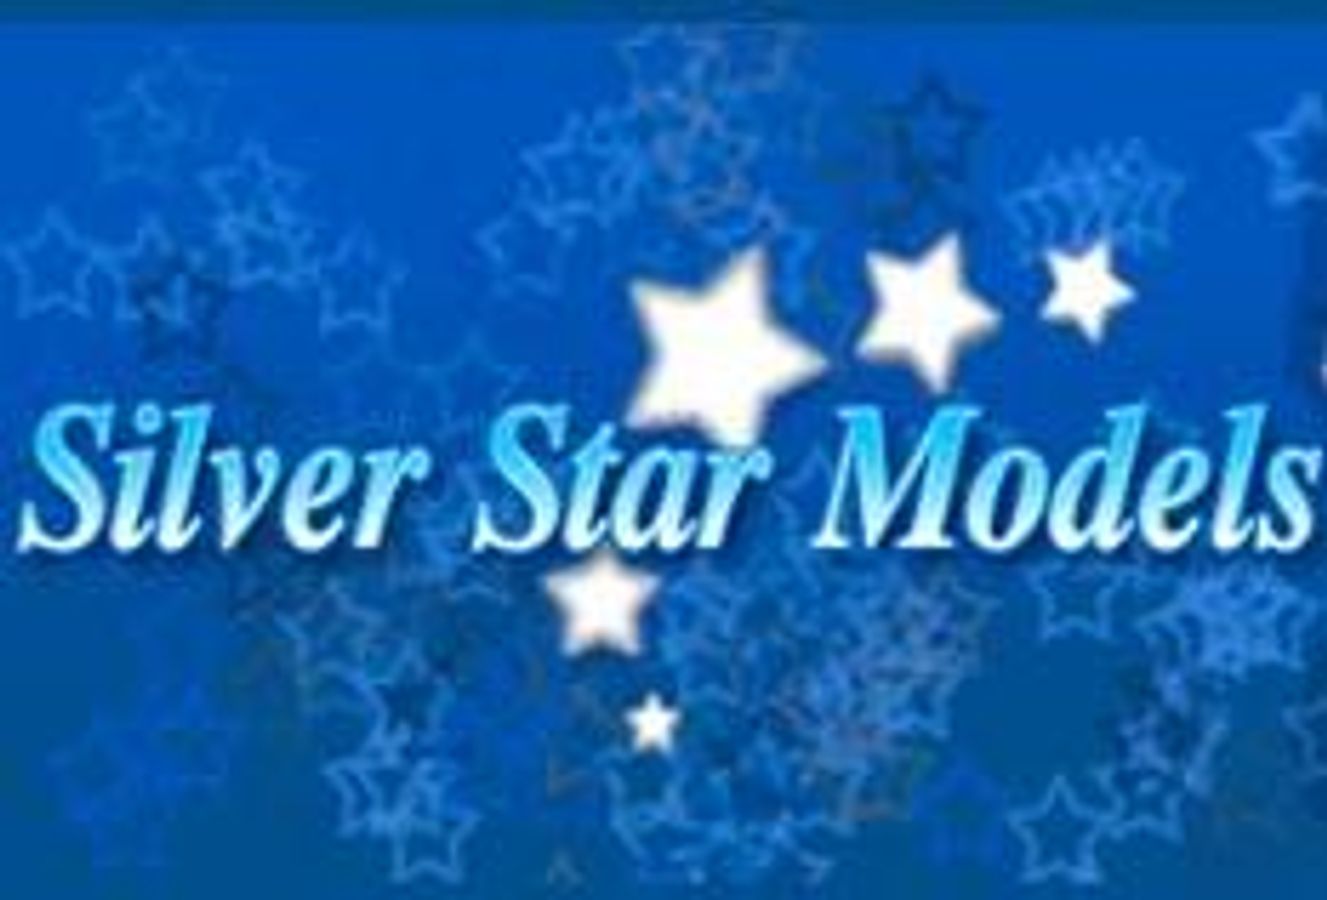 Silver Star Models